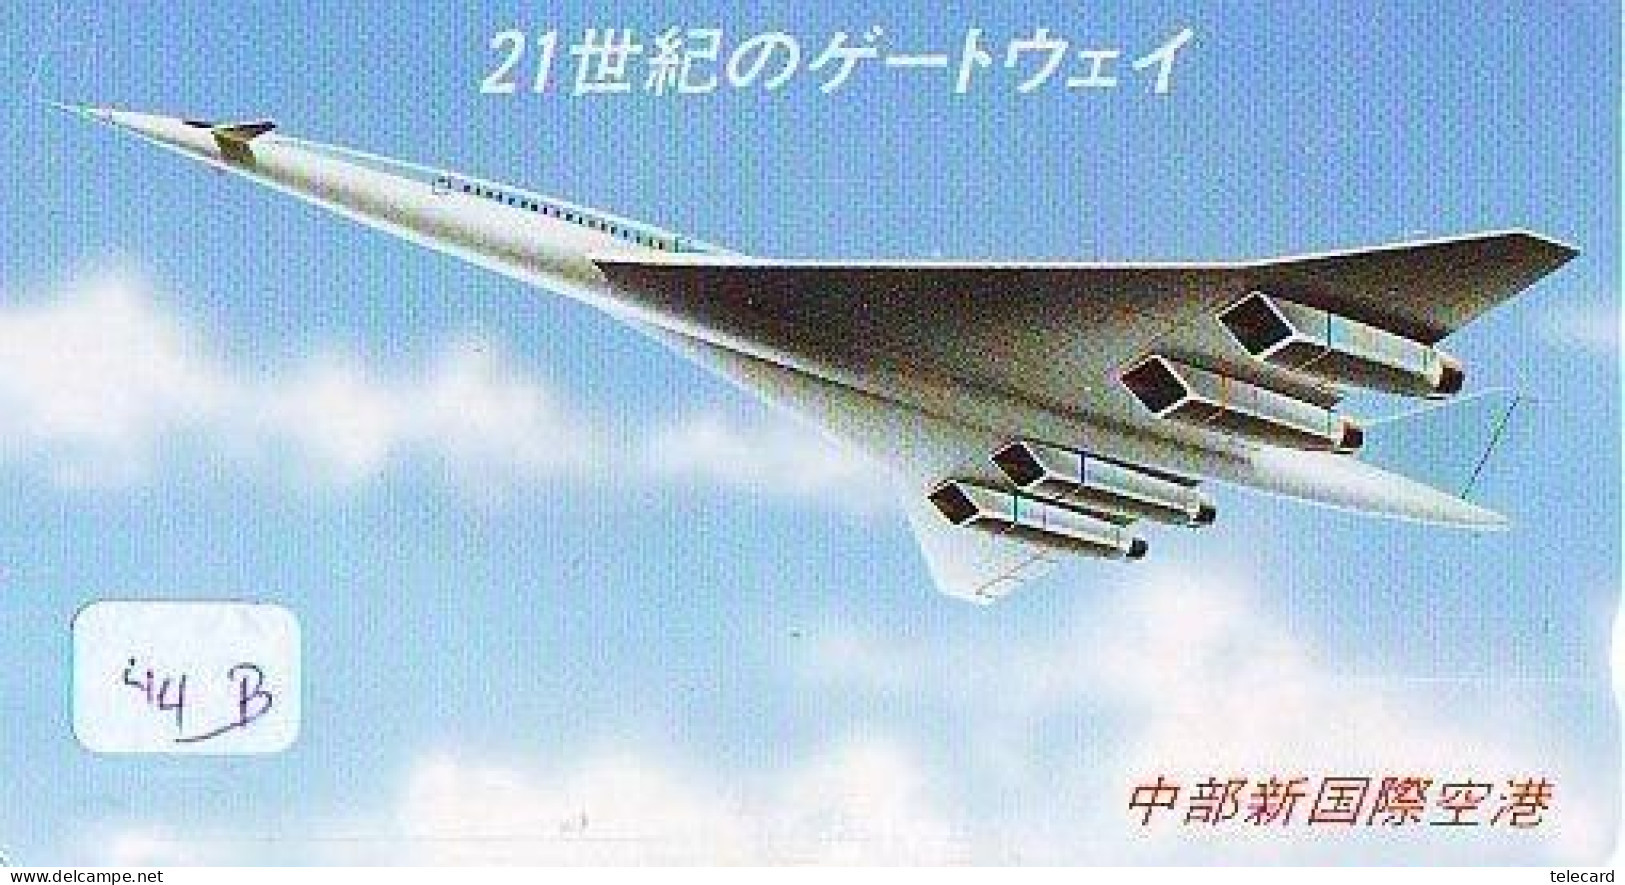 Télécarte Japon * Avion * 290-15574  * CONCORDE (44b)  Air France - Japan Air Plane Phonecard * Aeroplani Aeroplanos - Avions